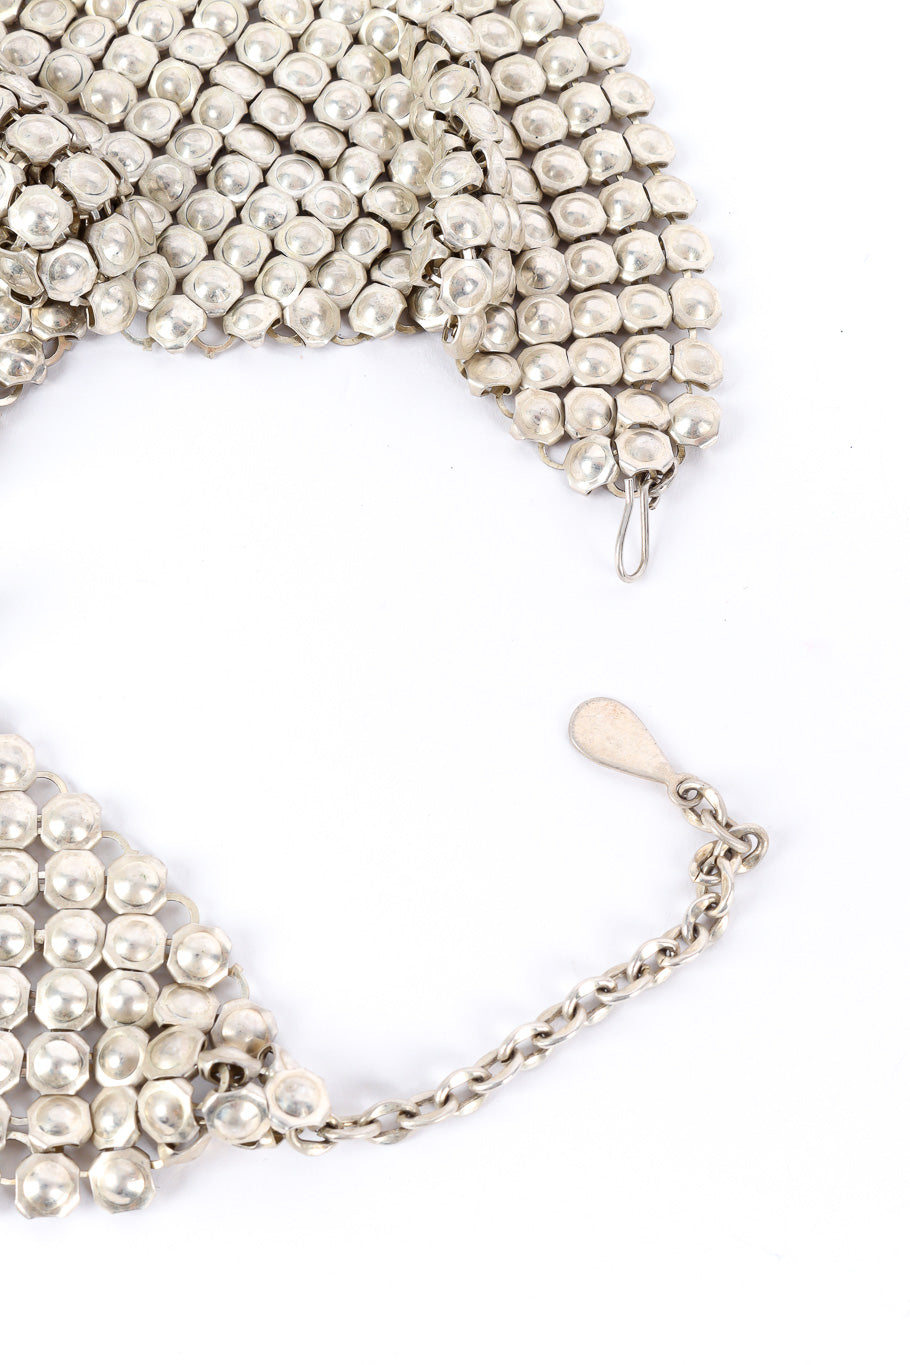 Silver tone metal mesh bib necklace hook and chain @recessla